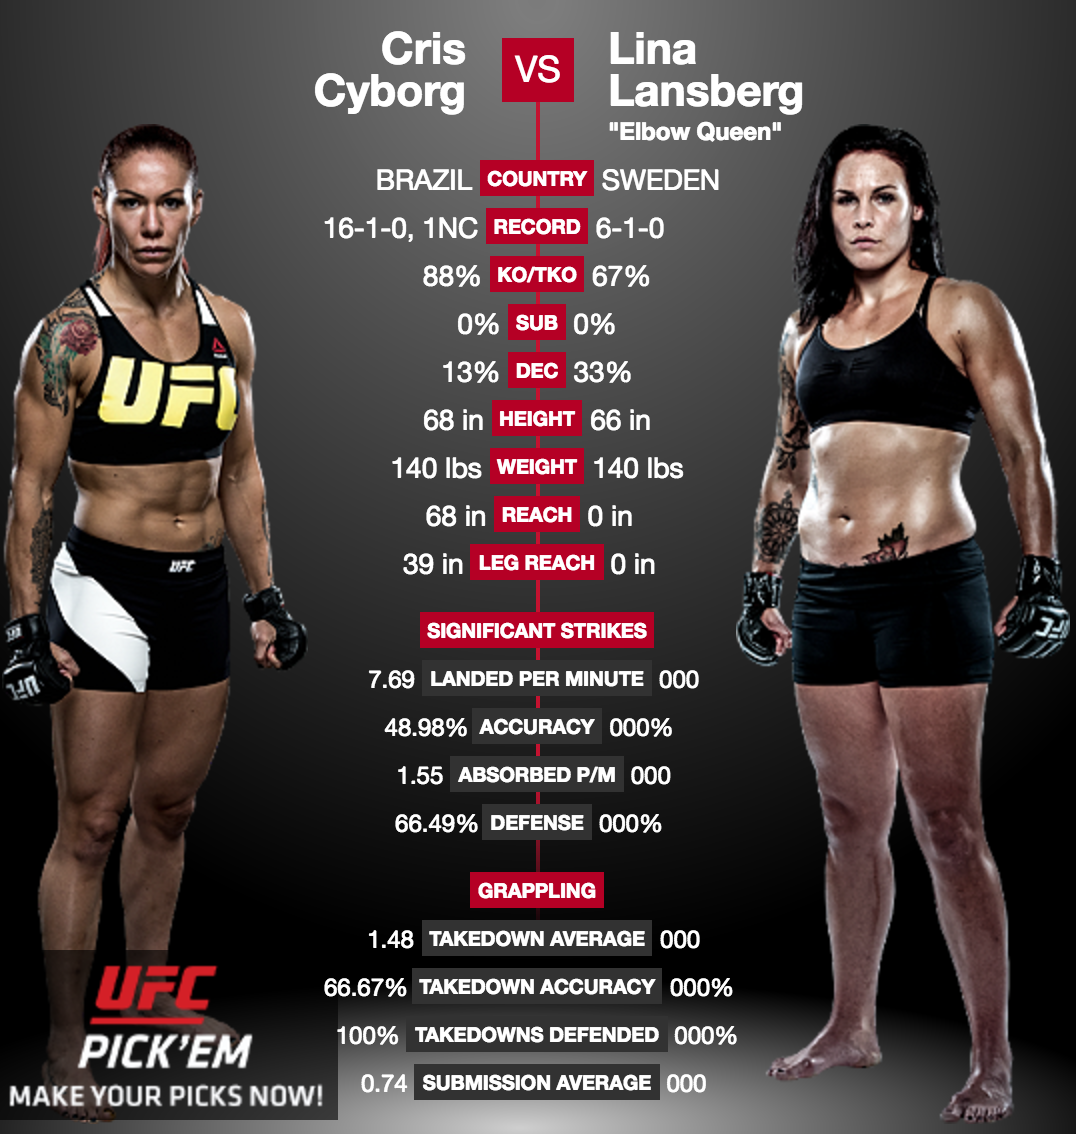 UFC Fight Night: Cris Cyborg vs. Lansberg